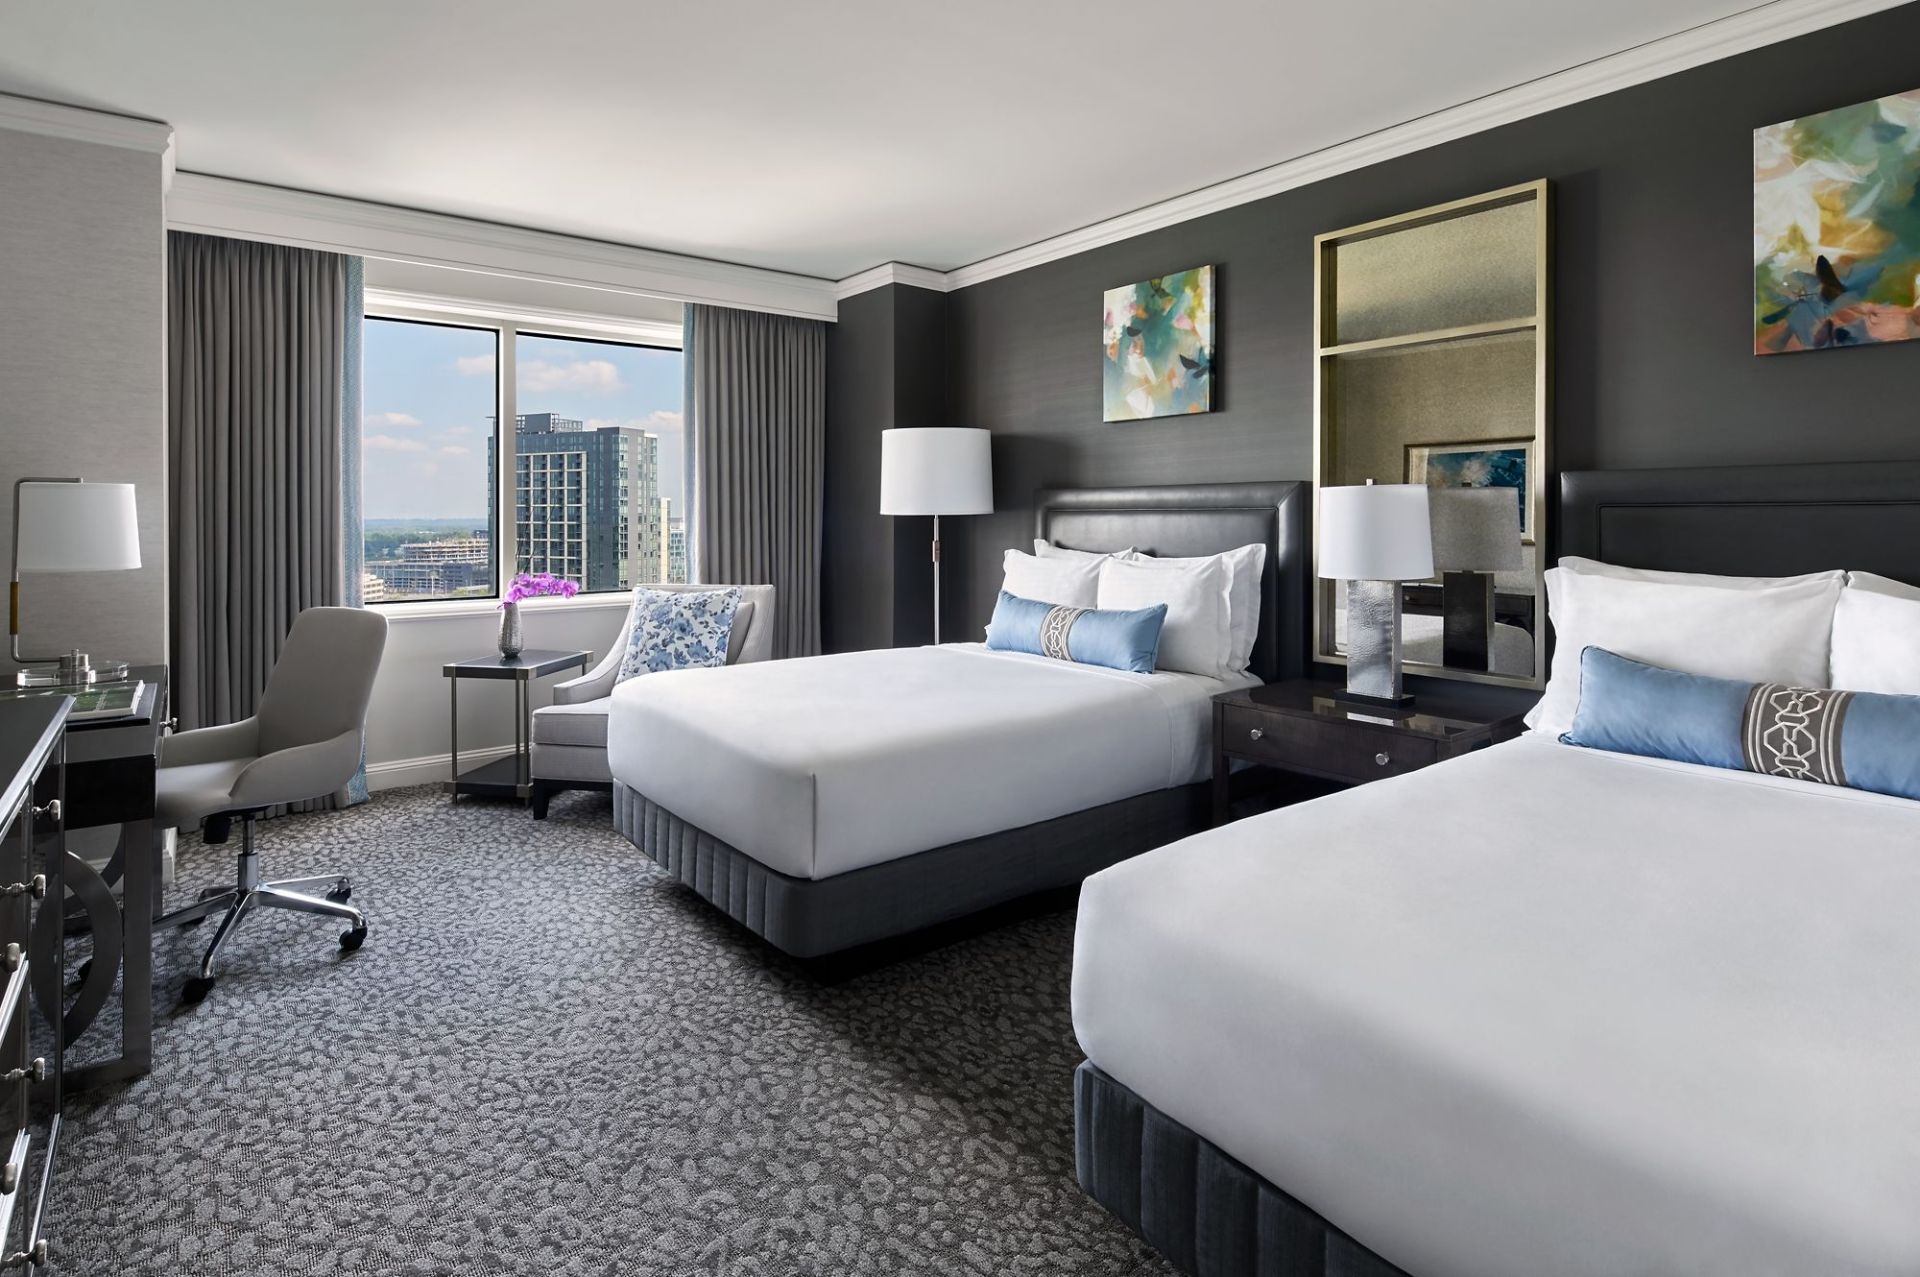 Ritz Carlton hotel room